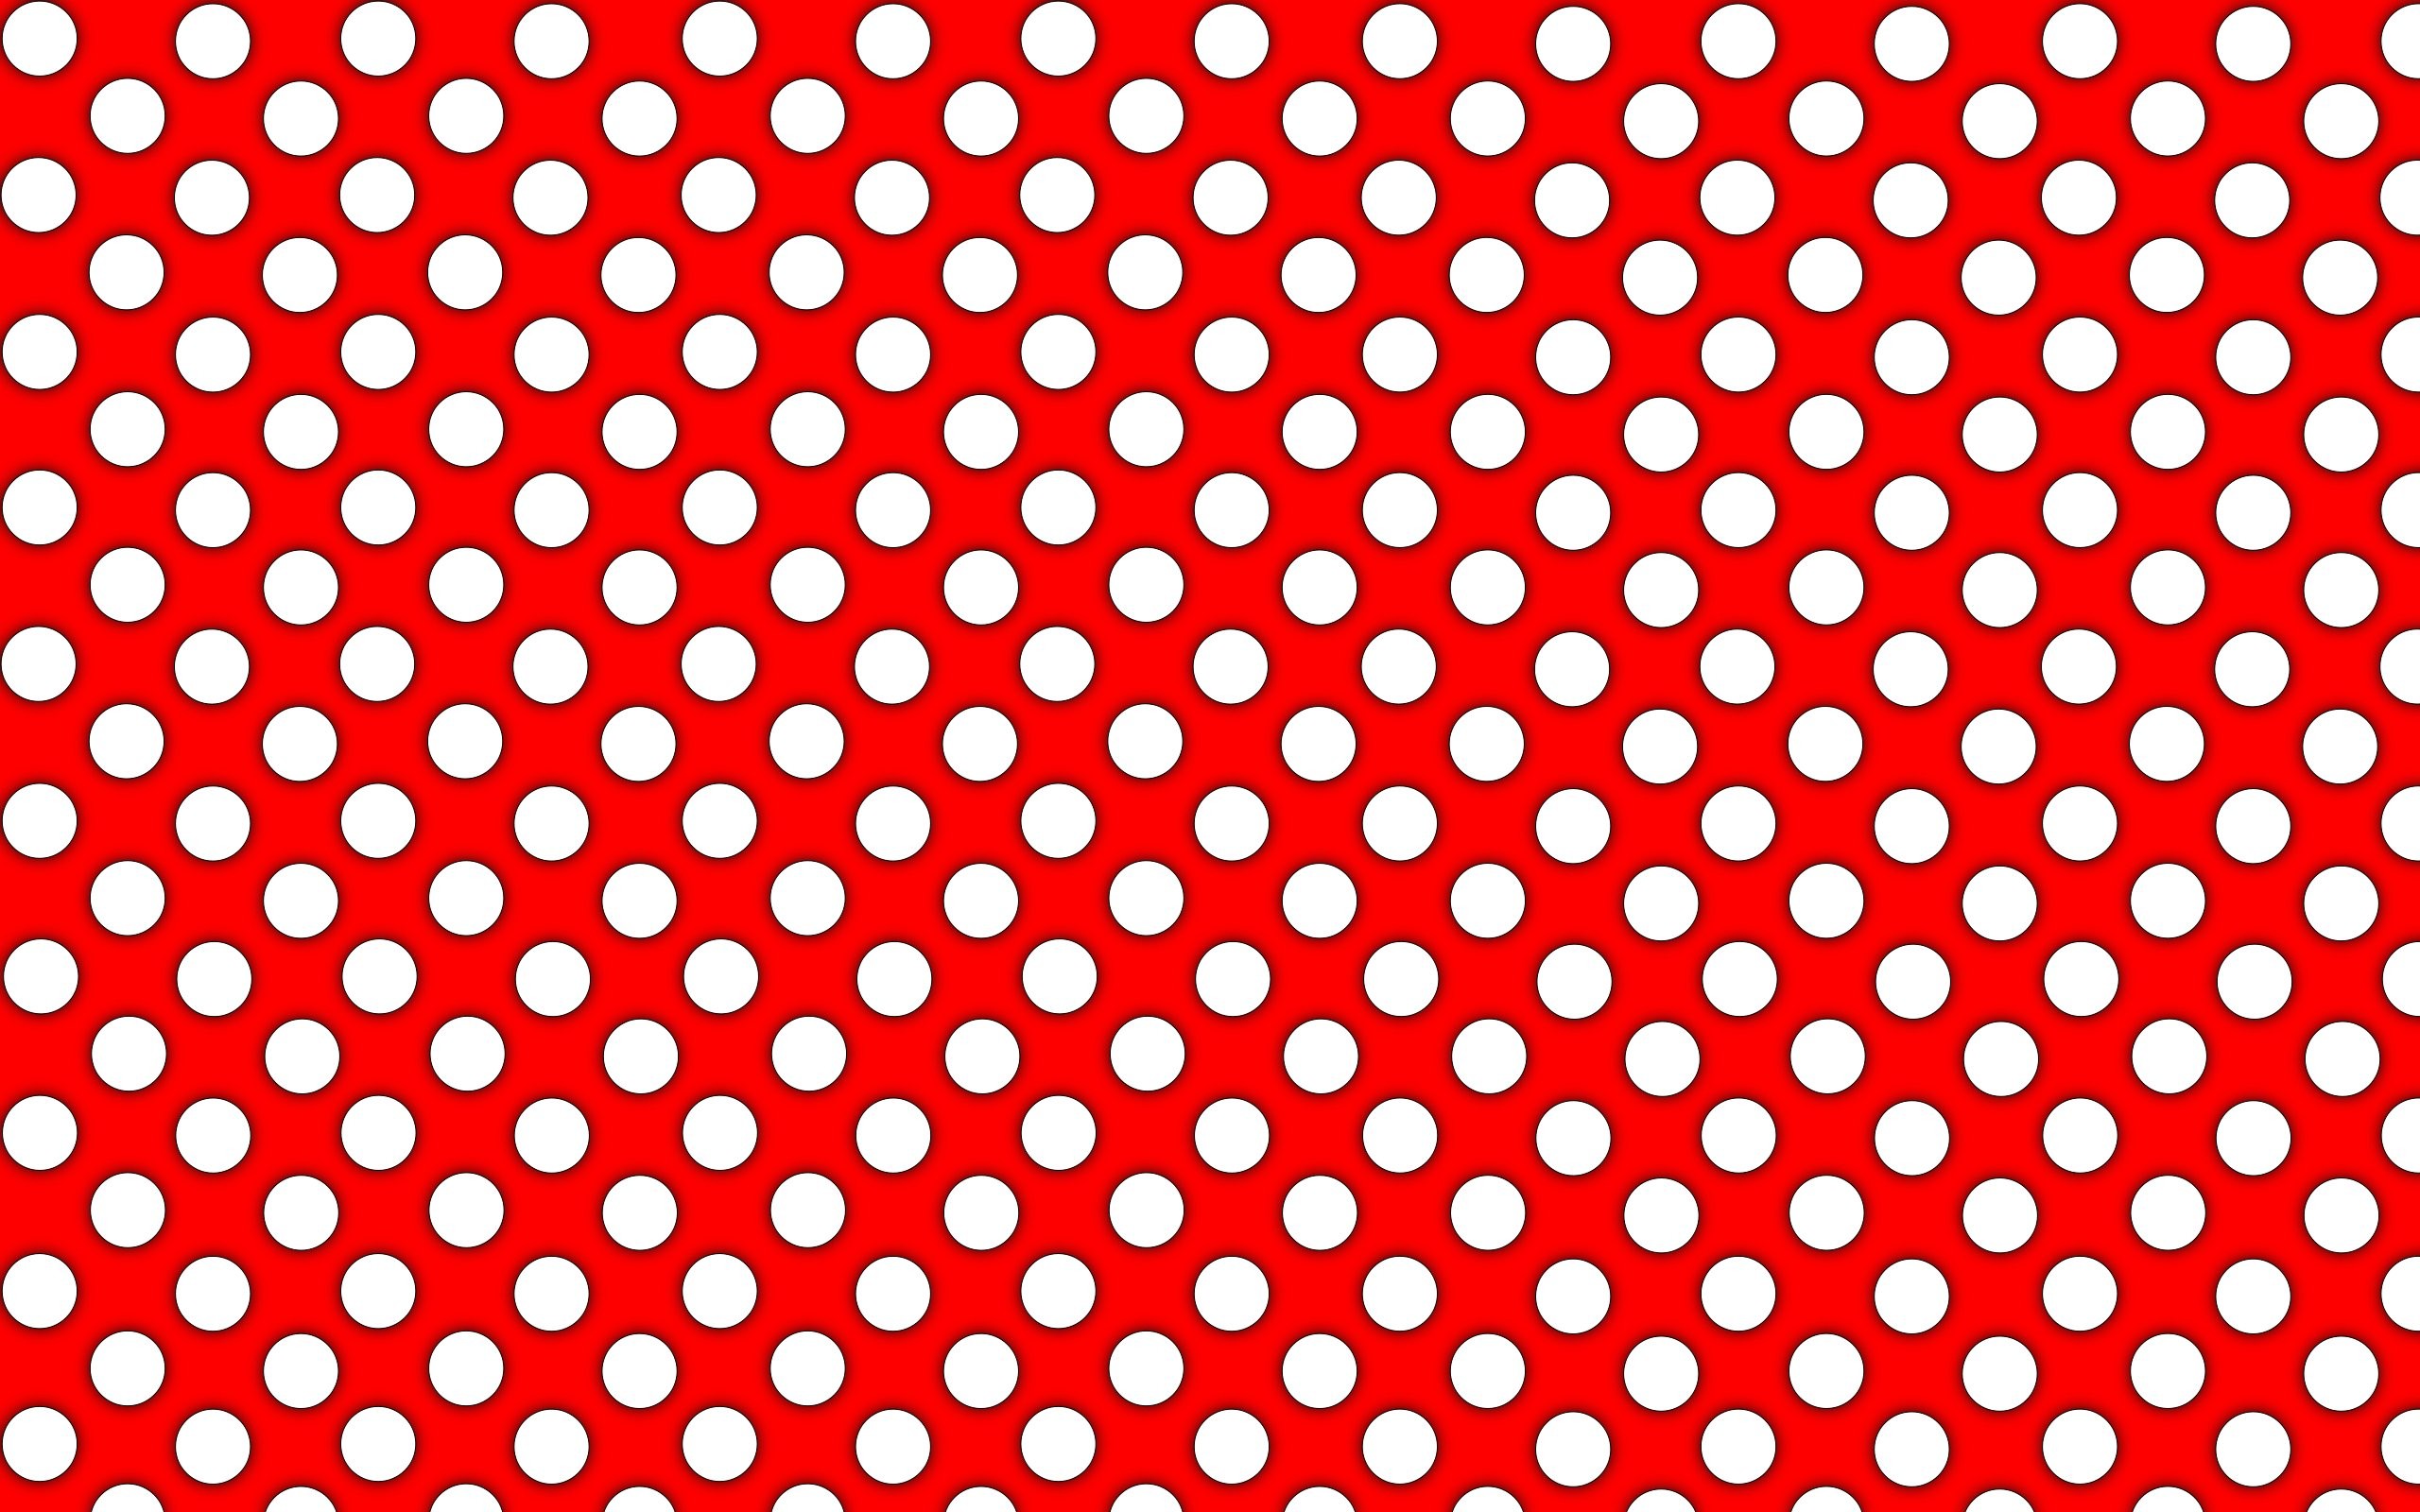 2560x1600 Hd Wallpaper Polka Dot Card Stock: Wallpapers for Gt Red Polka Dots .